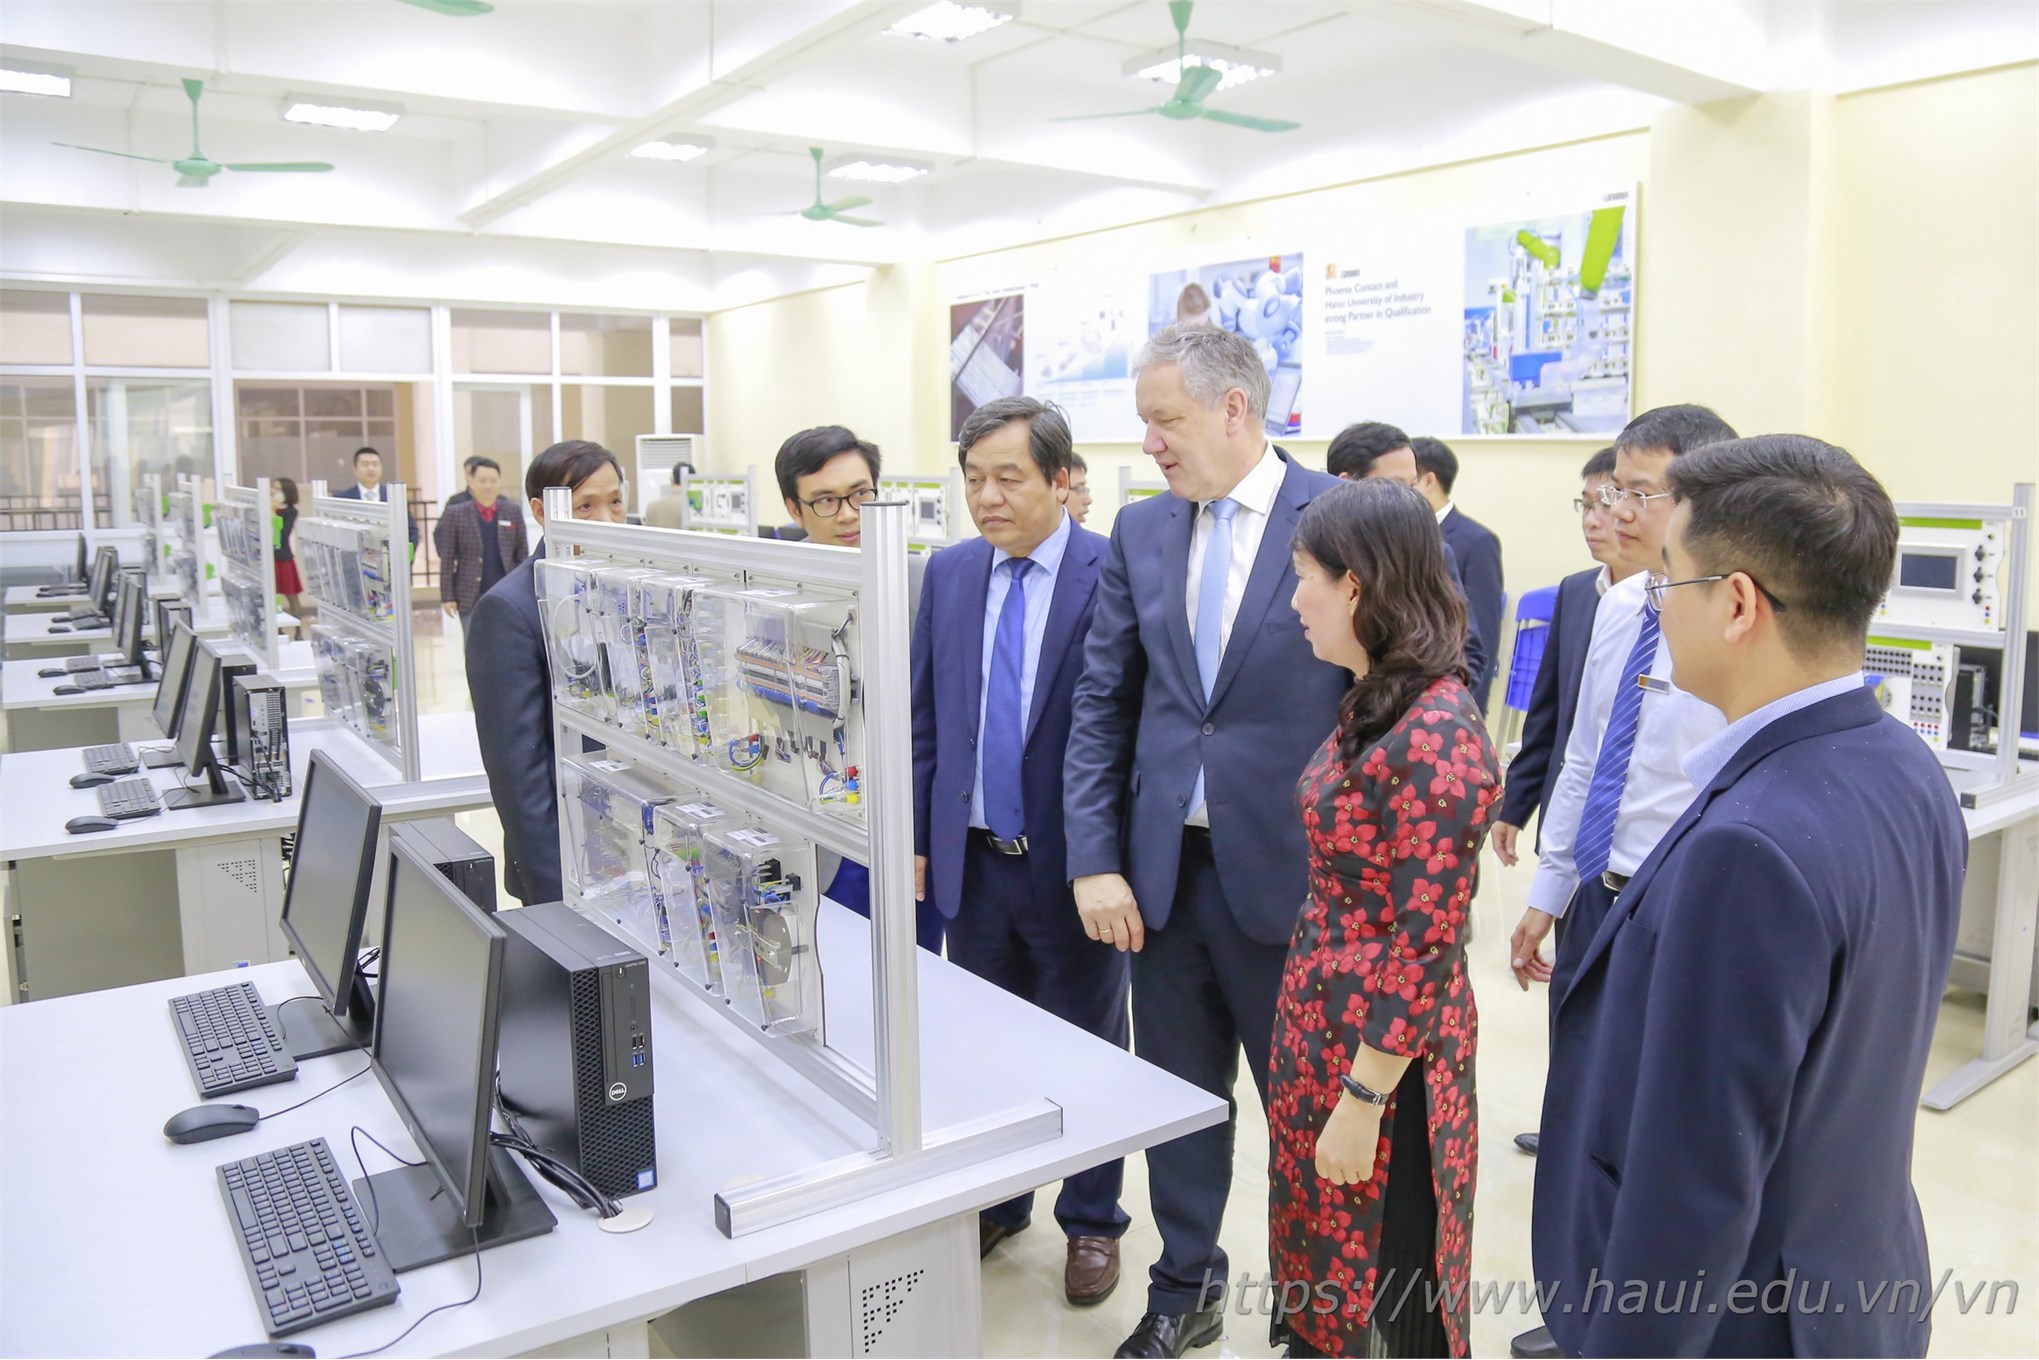 Equipment Handover Ceremony of Phoenix Contact Group - Germany to Hanoi University of Industry